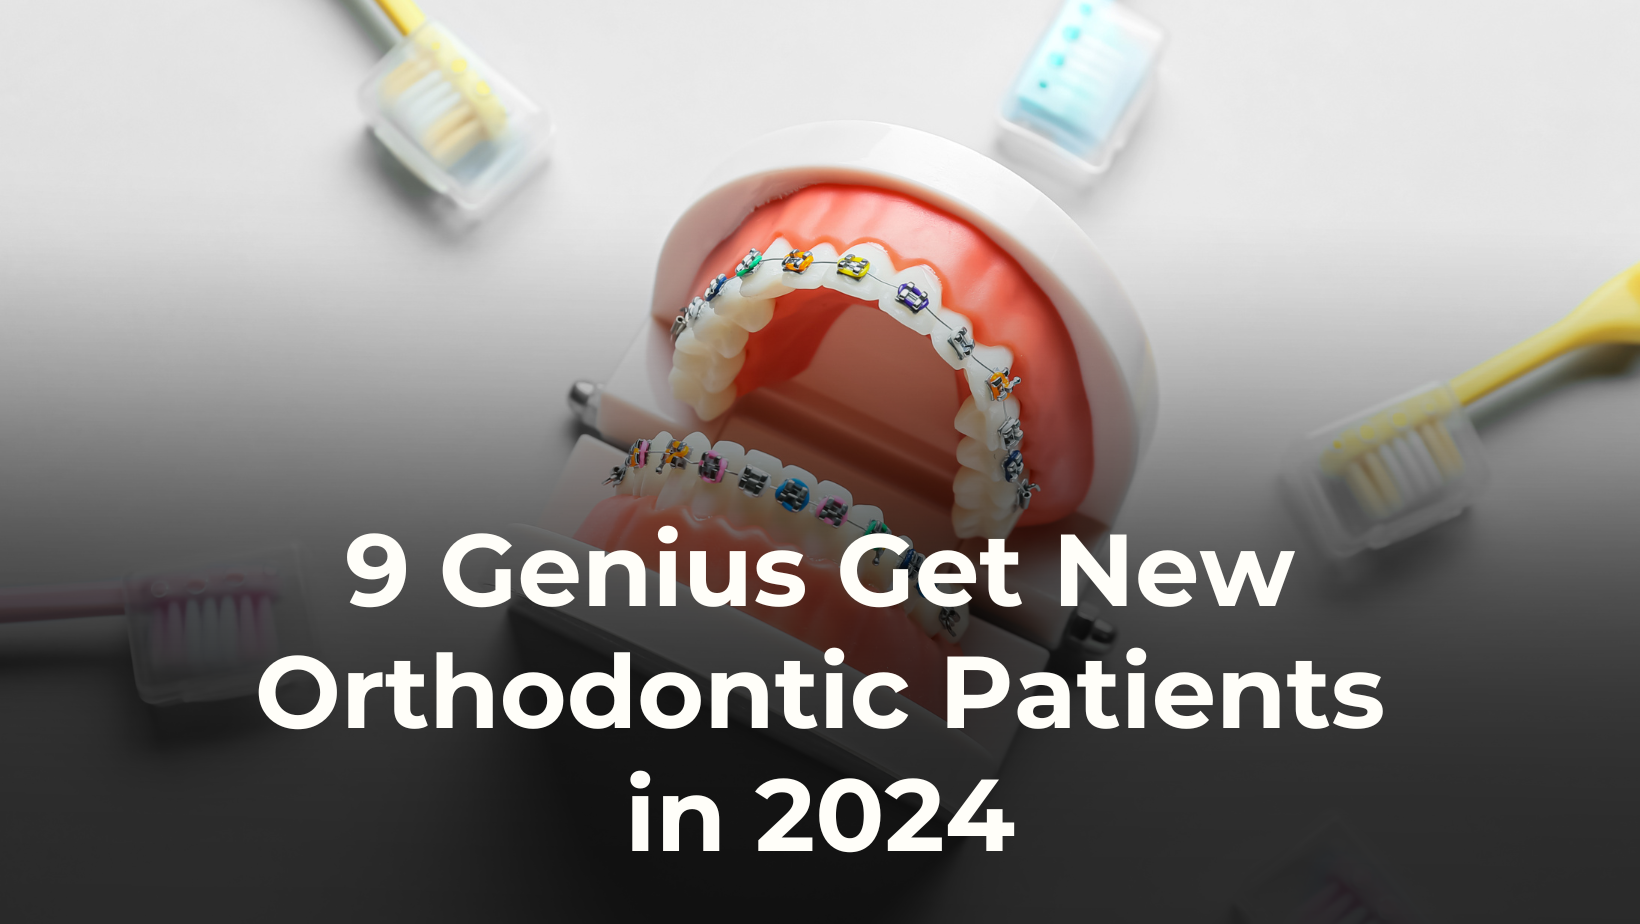 9 Genius Orthodontic Marketing Ideas To Get New Patients in 2024